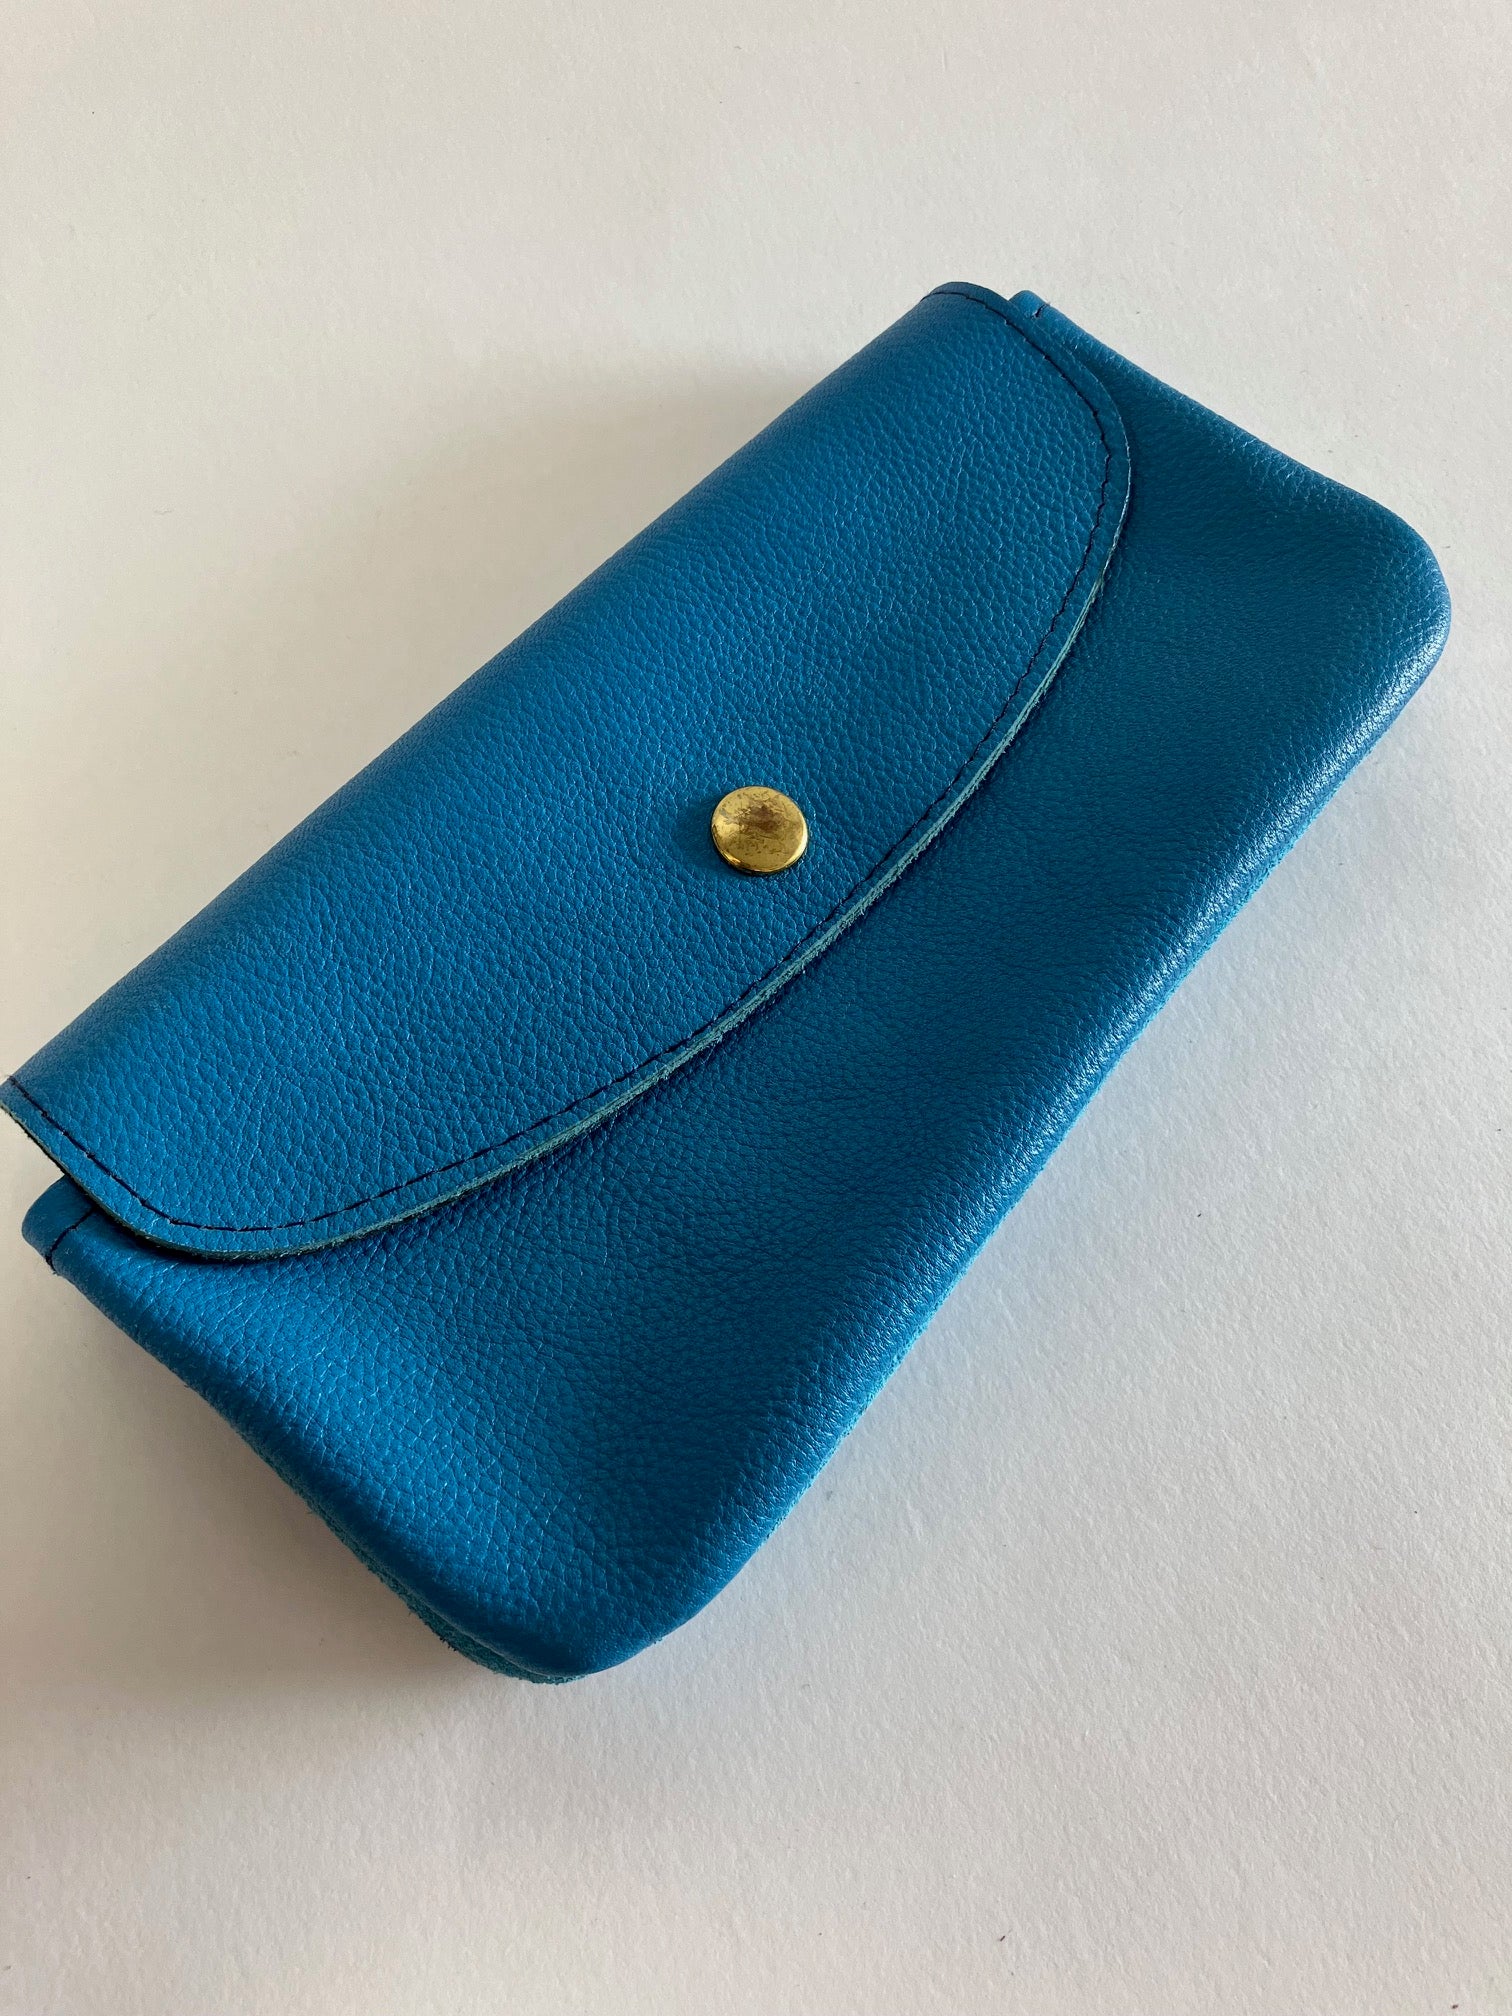 SAMPLE neon blue and black Minimalist leather wallet